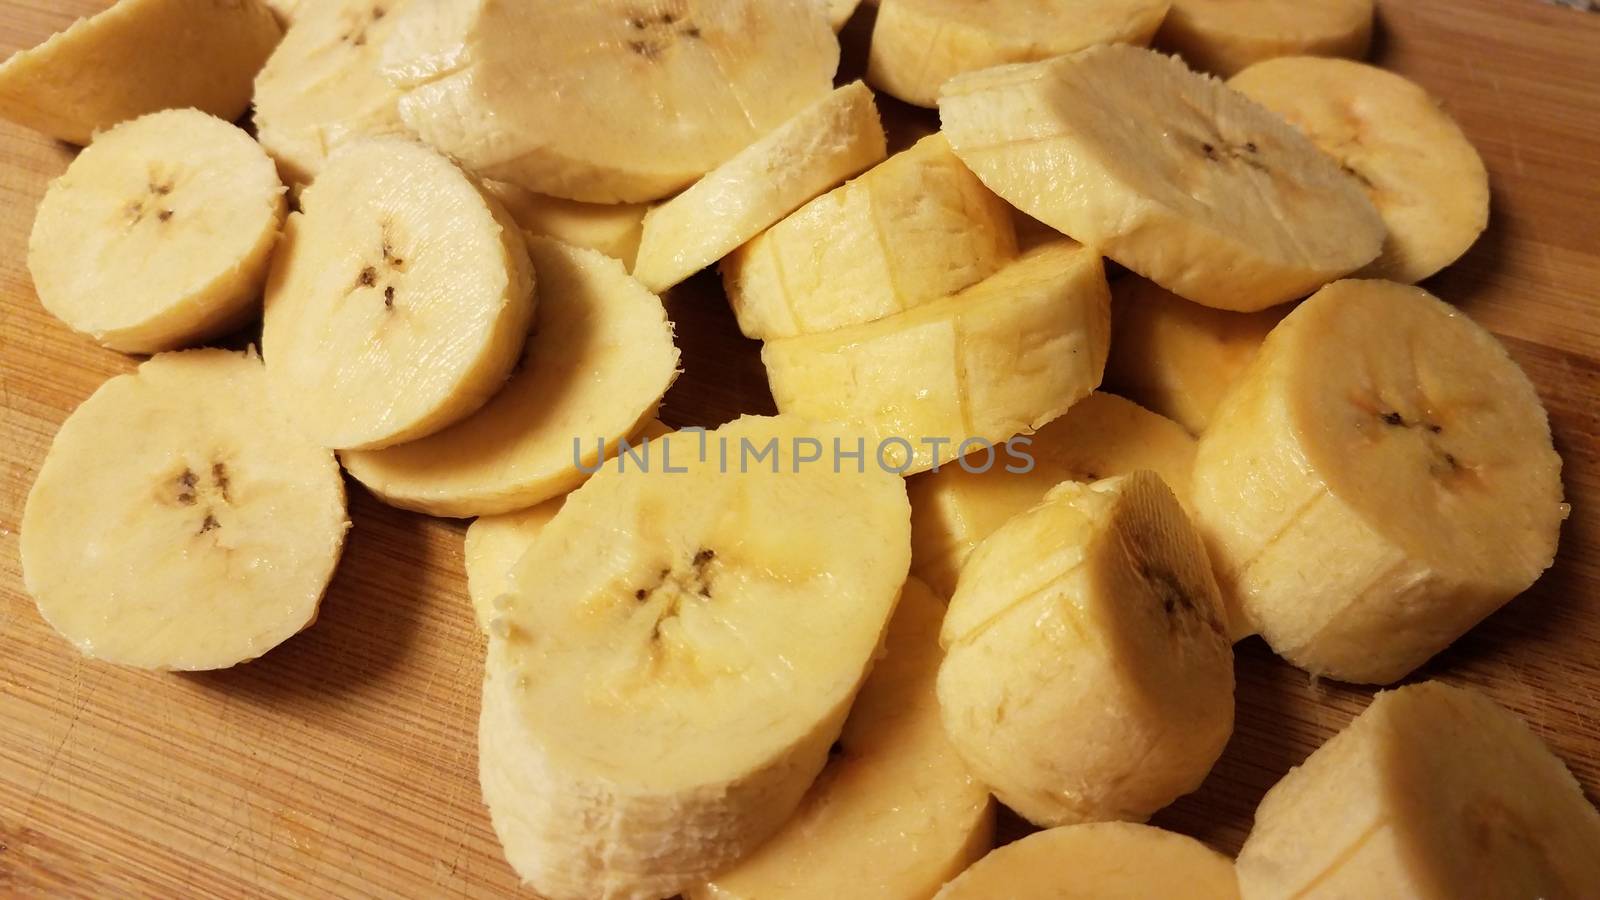 sliced plantain banana on wood cutting board by stockphotofan1